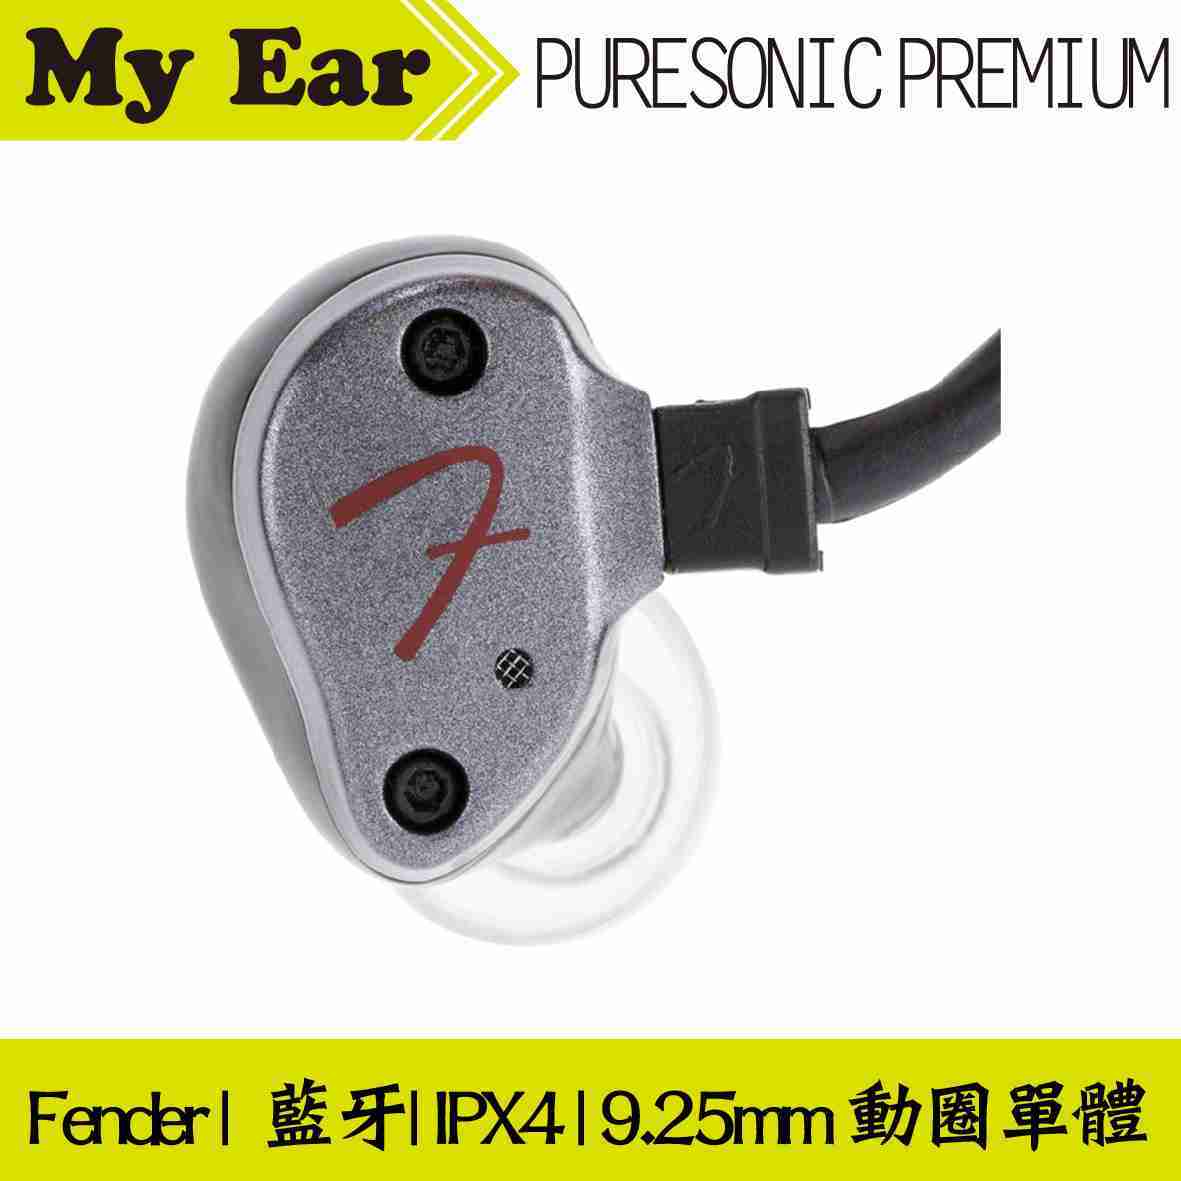 Fender PureSonic Premium Wireless 頸掛式藍芽aptx入耳式 | My Ear耳機專門店